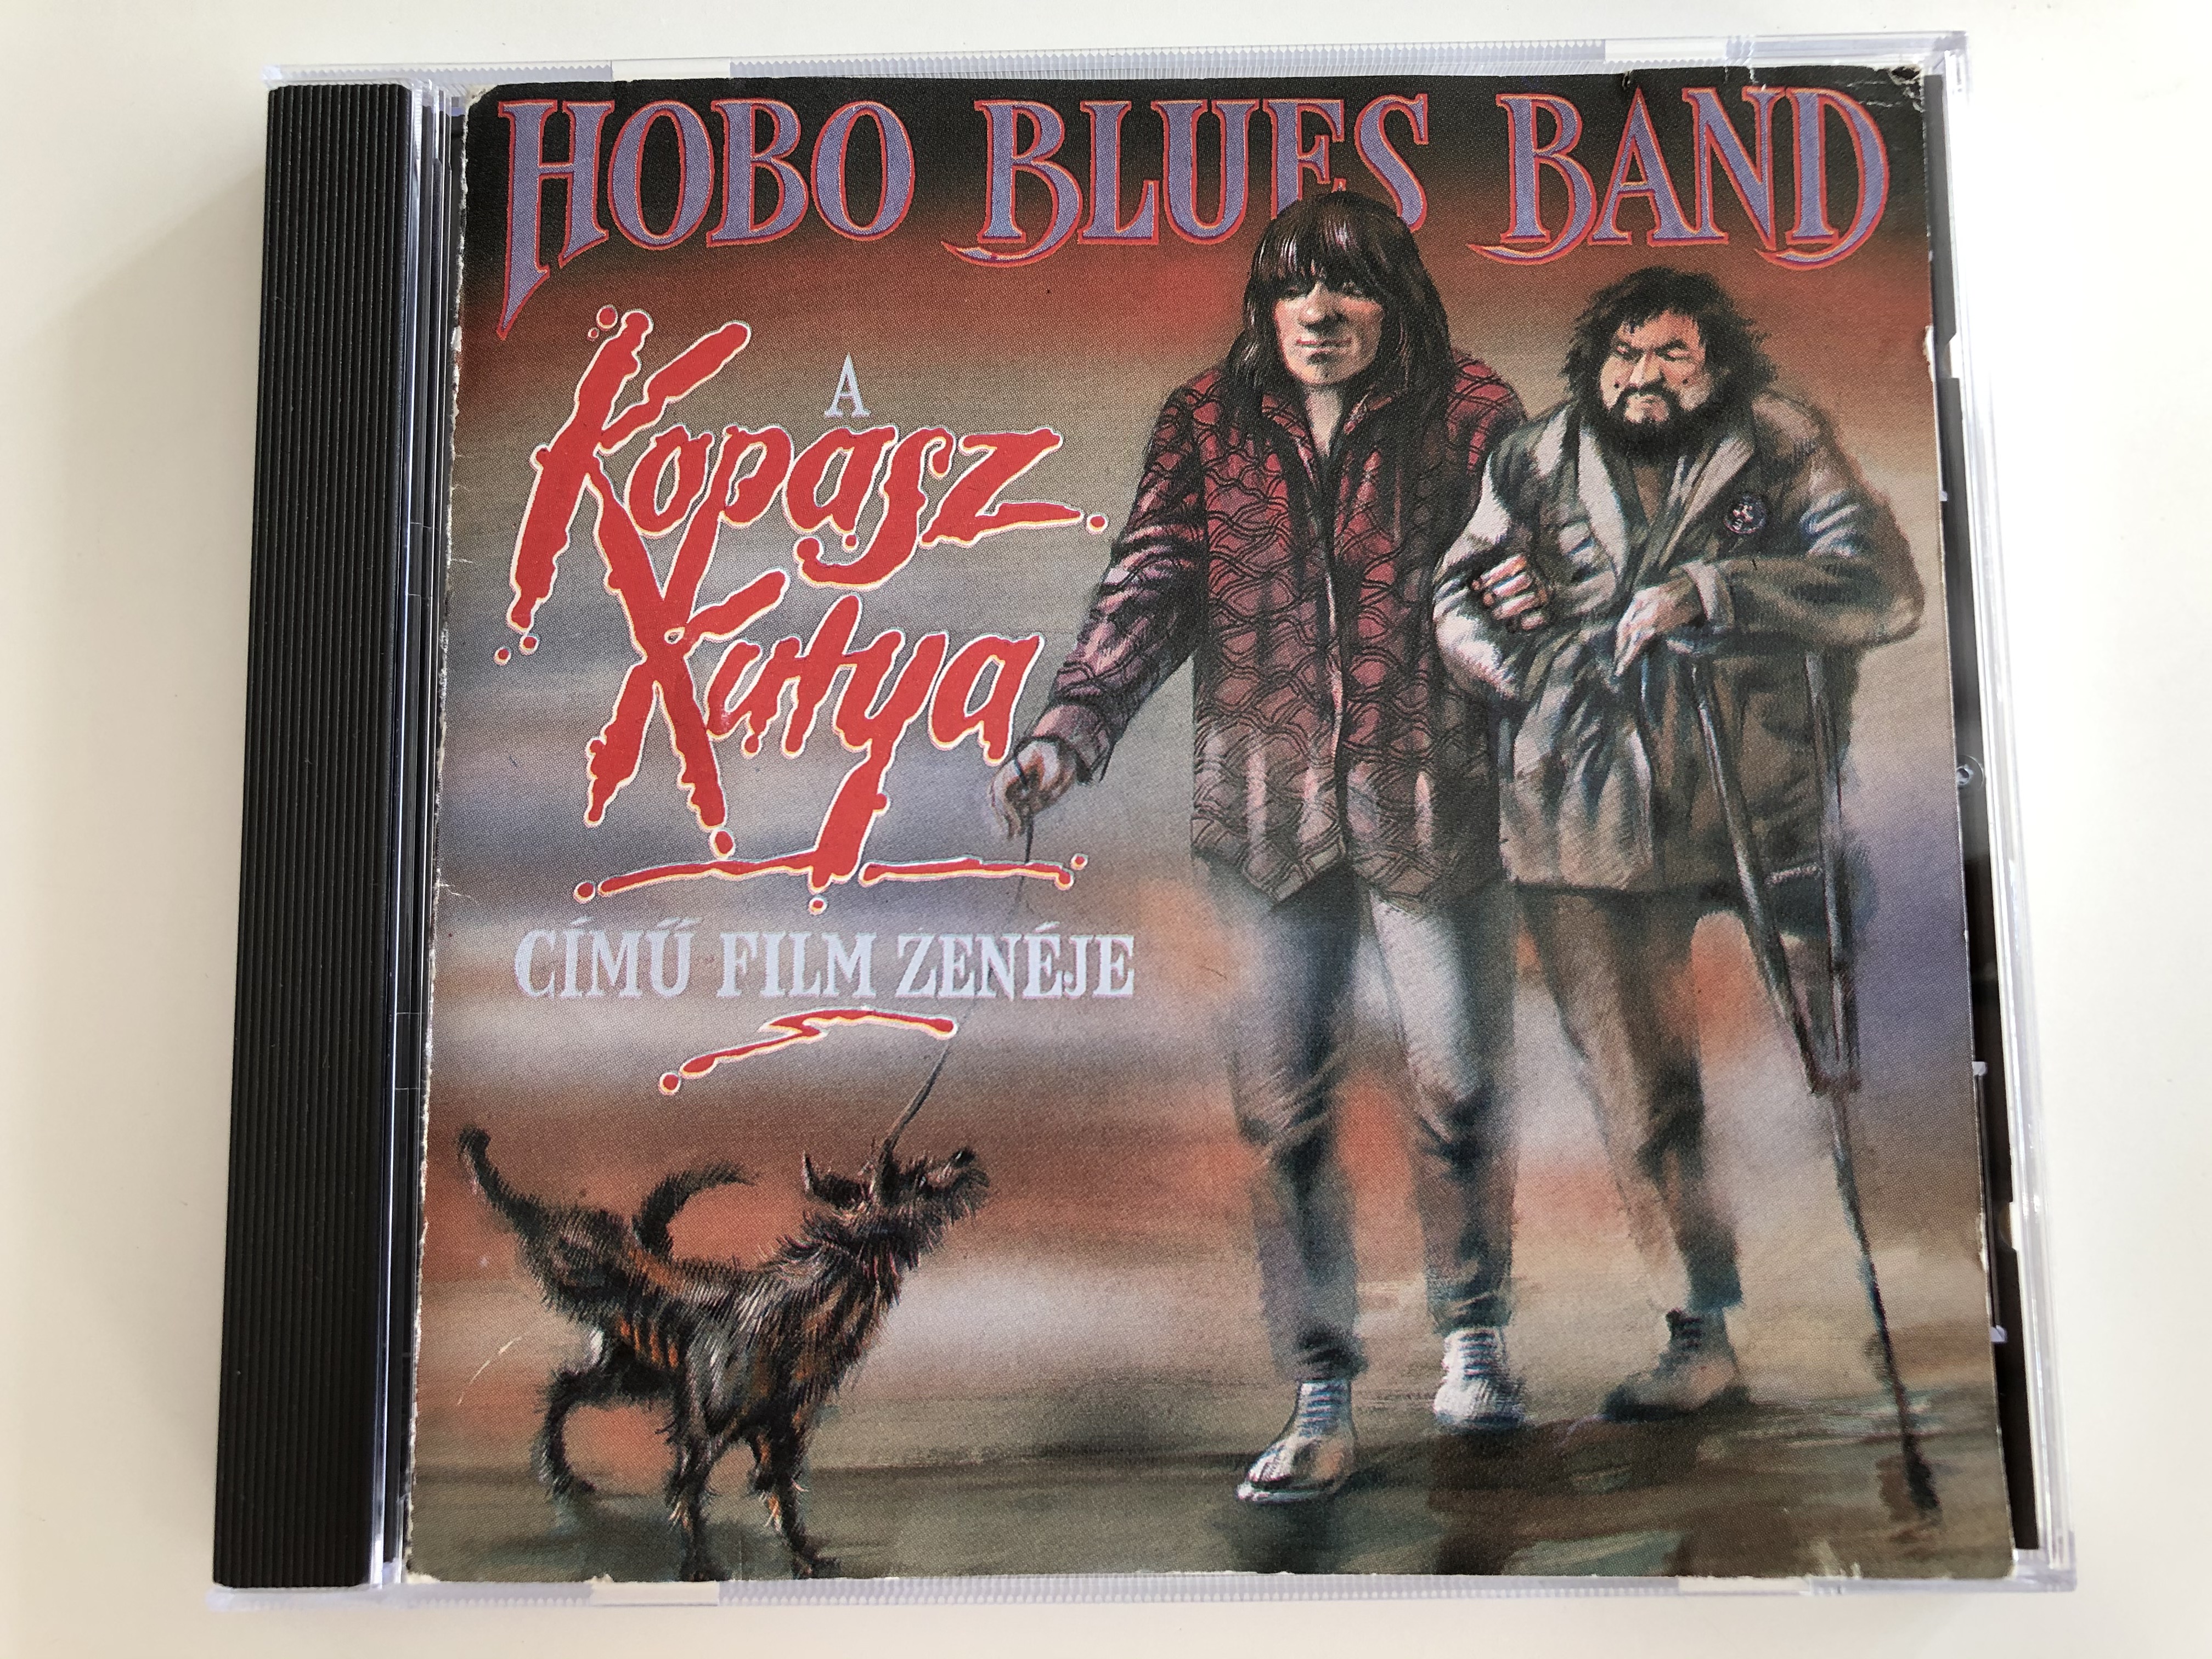 hobo-blues-band-a-kopaszkutya-cimu-film-zeneje-mega-audio-cd-1993-hcd-37692-93m-085-1-.jpg